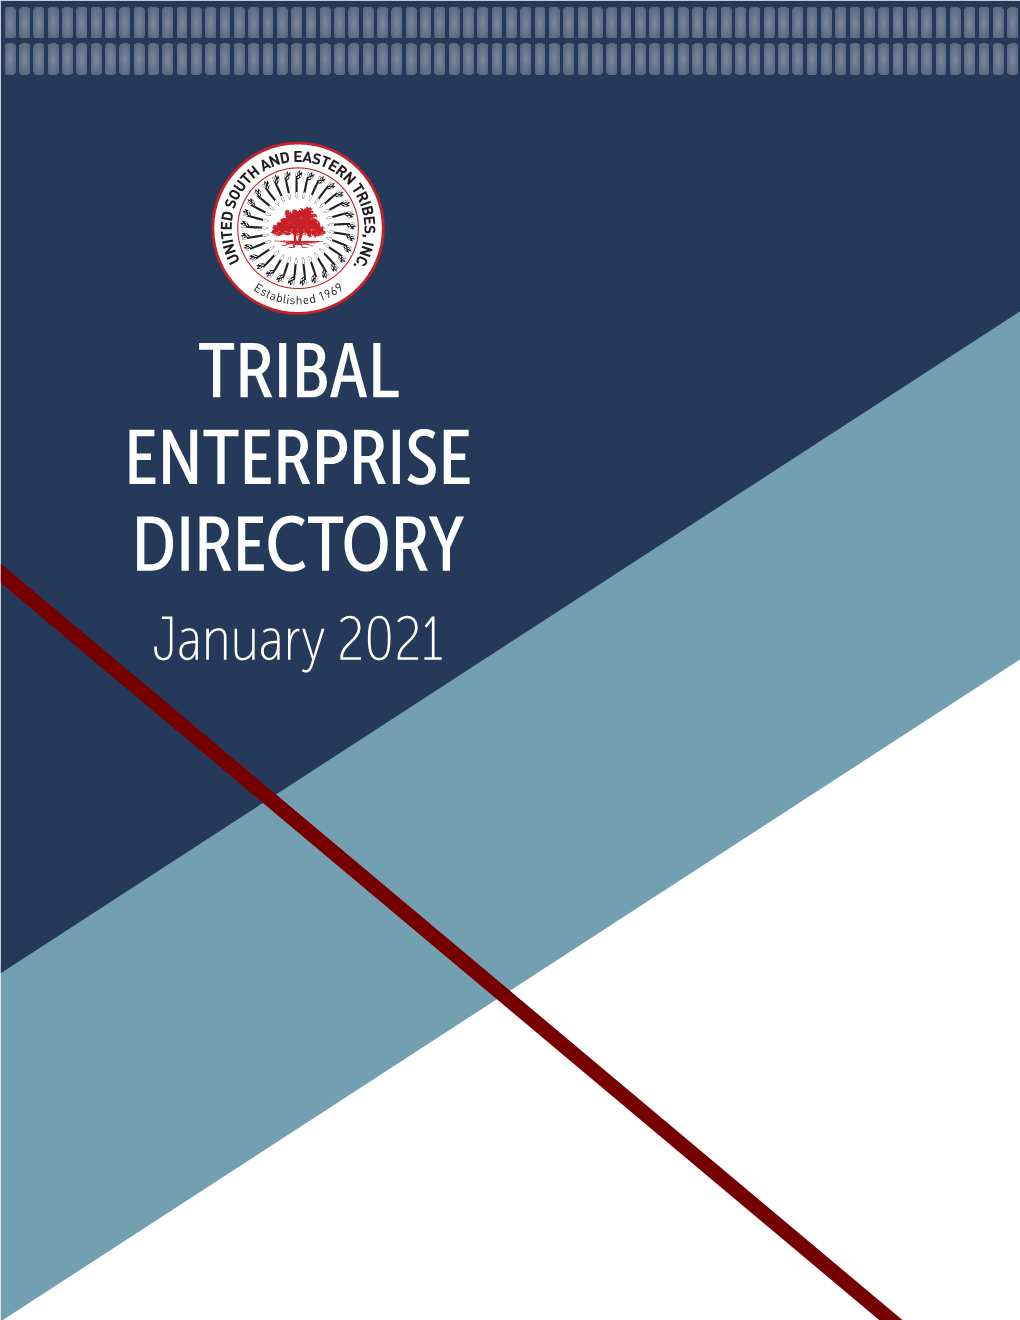 USET Tribal Enterprise Directory a Reality